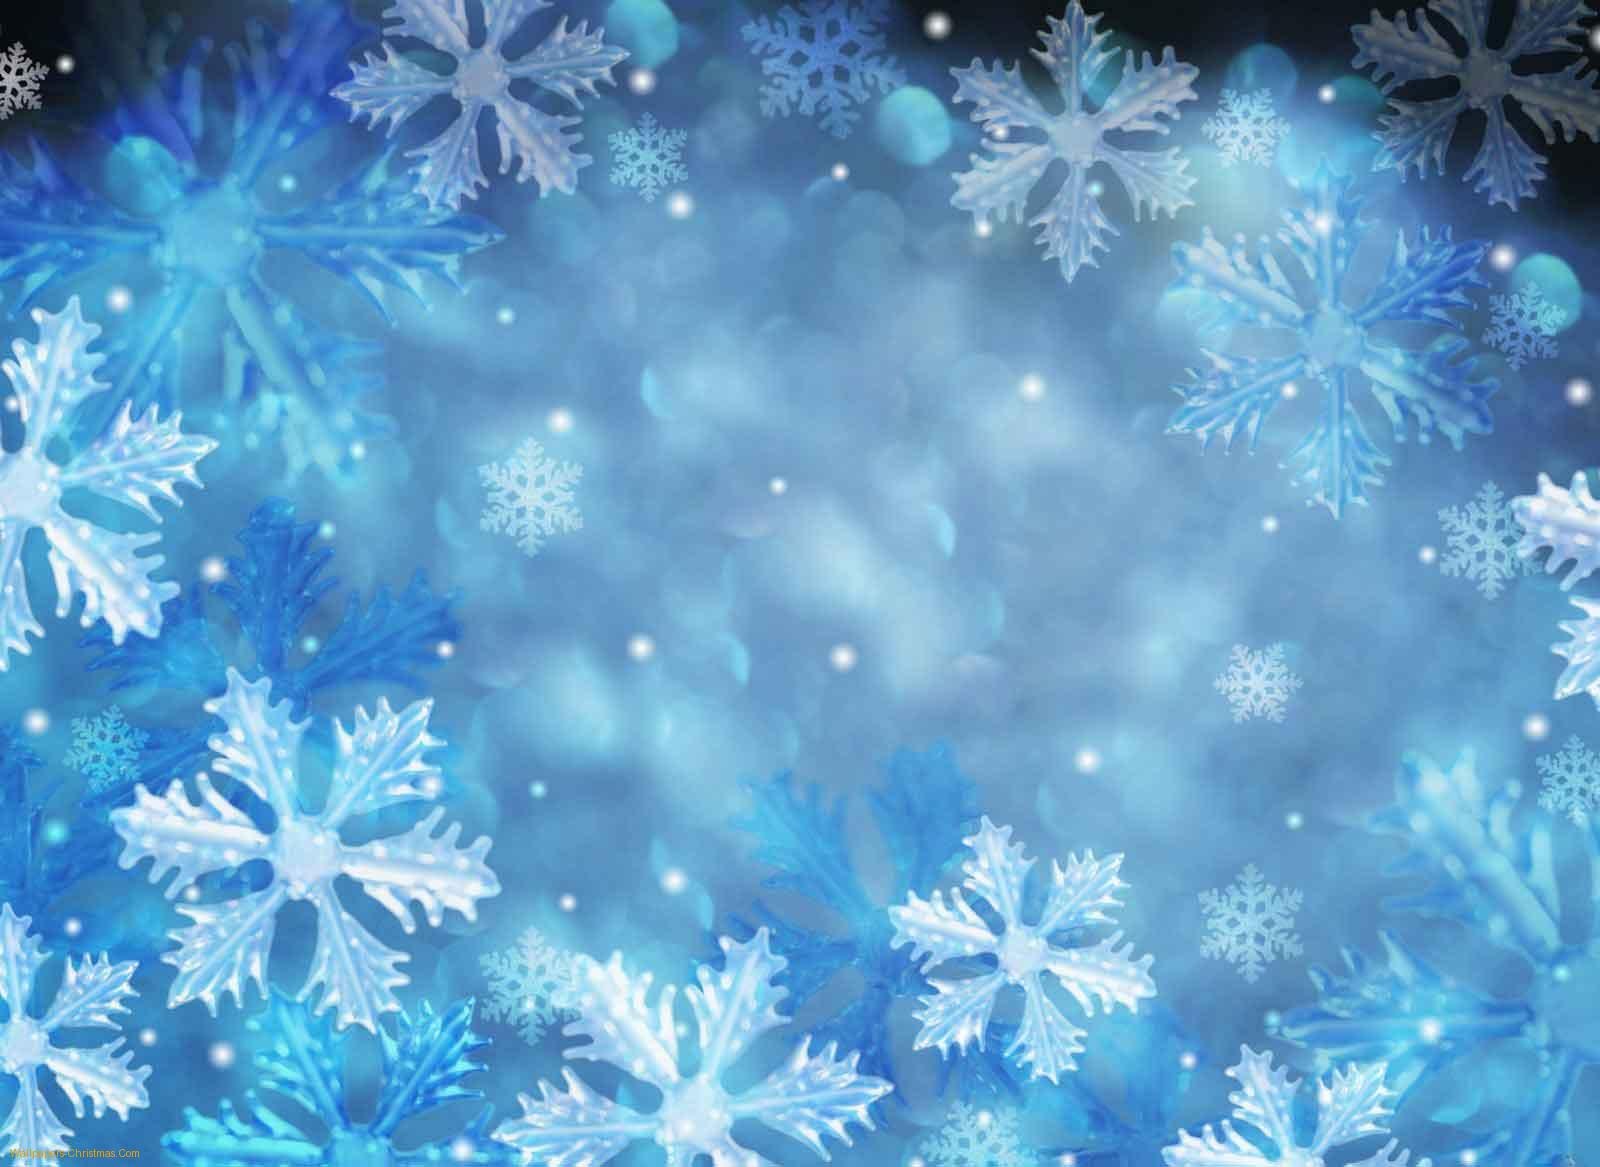 Christmas Snow Wallpaper Hd Christmas snow wallpaper 10479 1600x1167